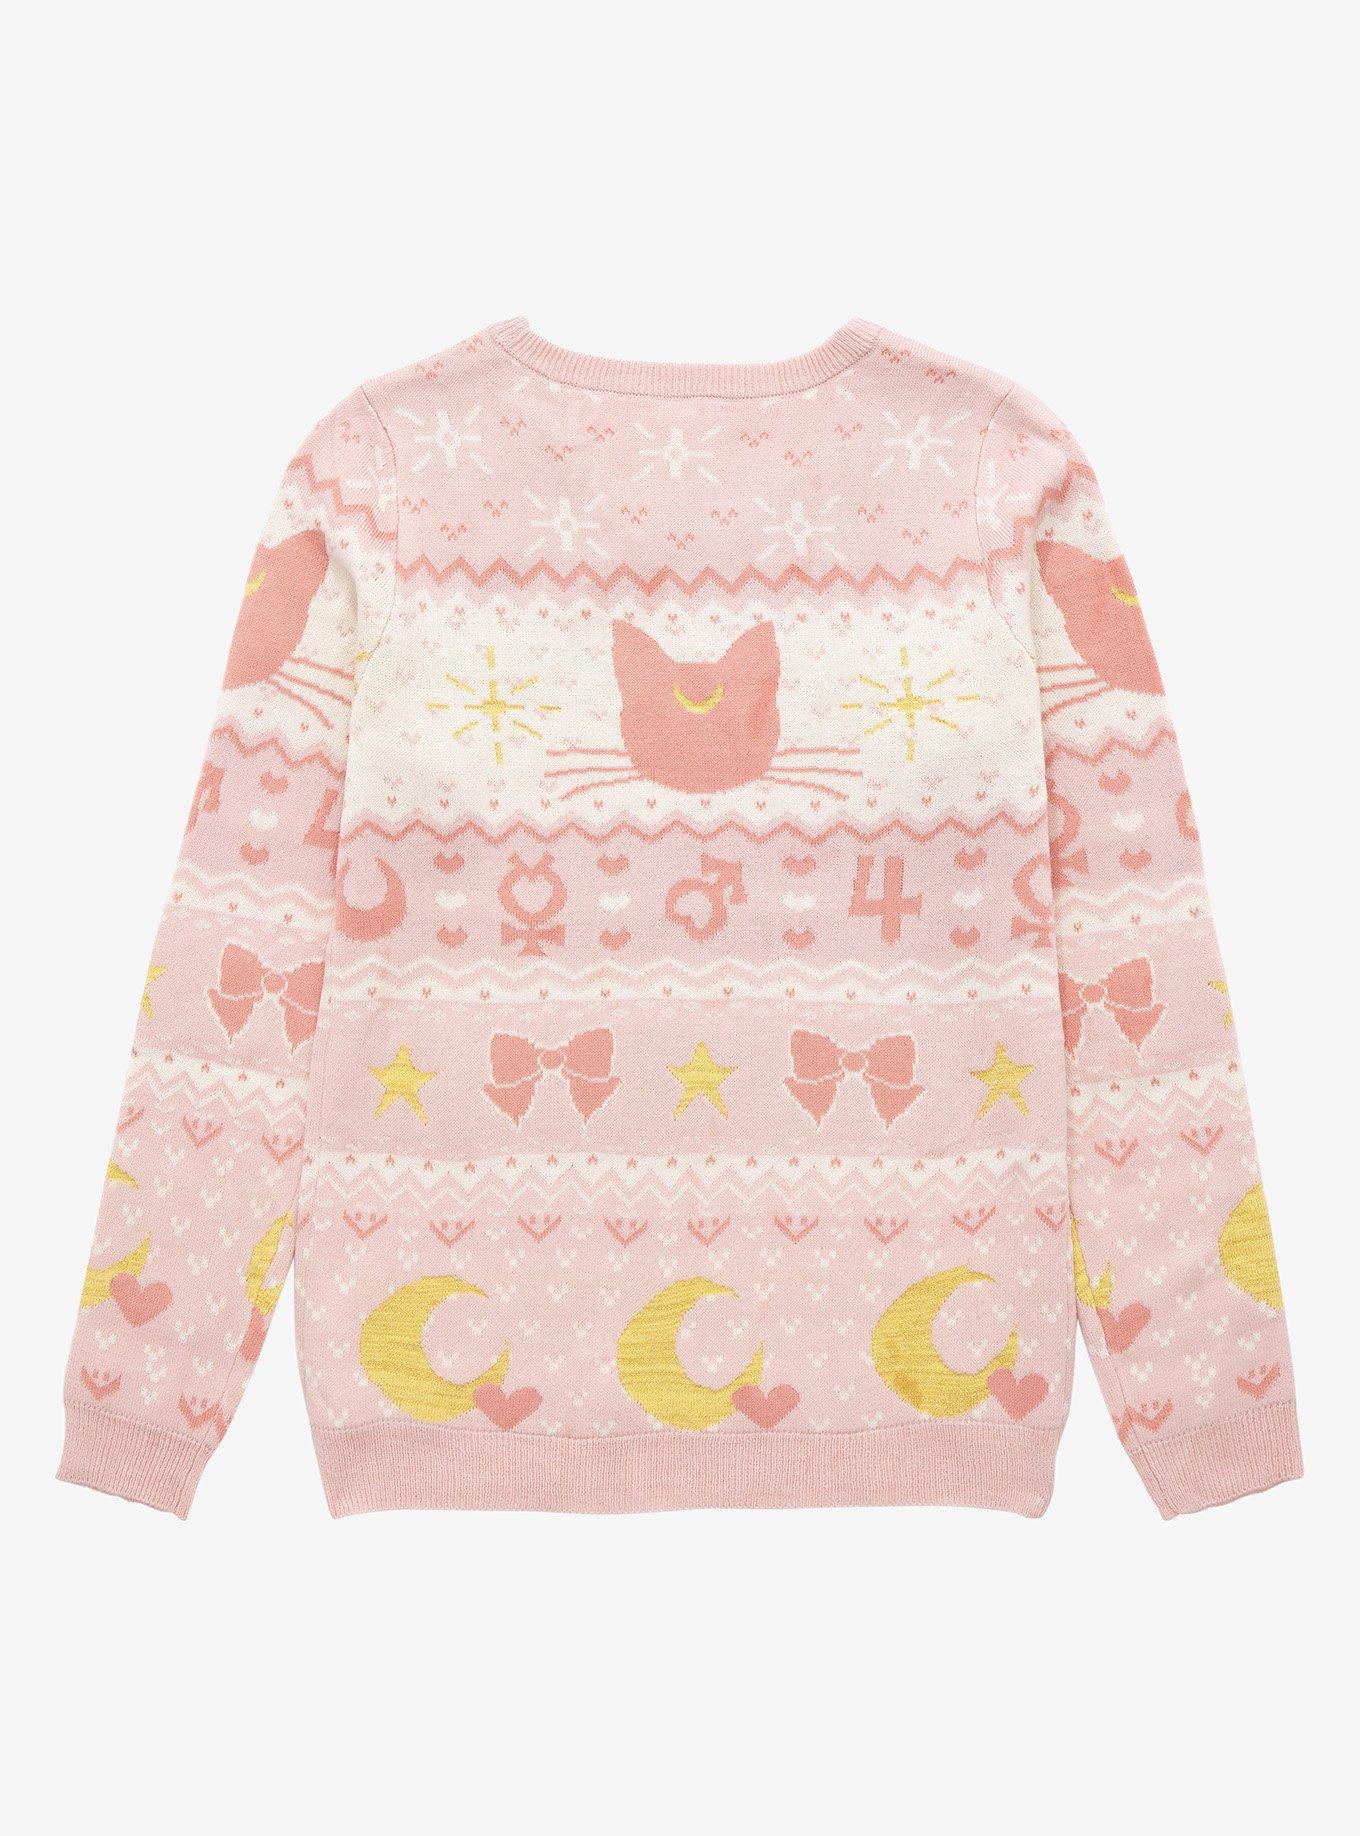 Sailor Moon Luna & Sailor Guardian Symbols Women's Holiday Sweater - BoxLunch Exclusive, LIGHT PINK, alternate